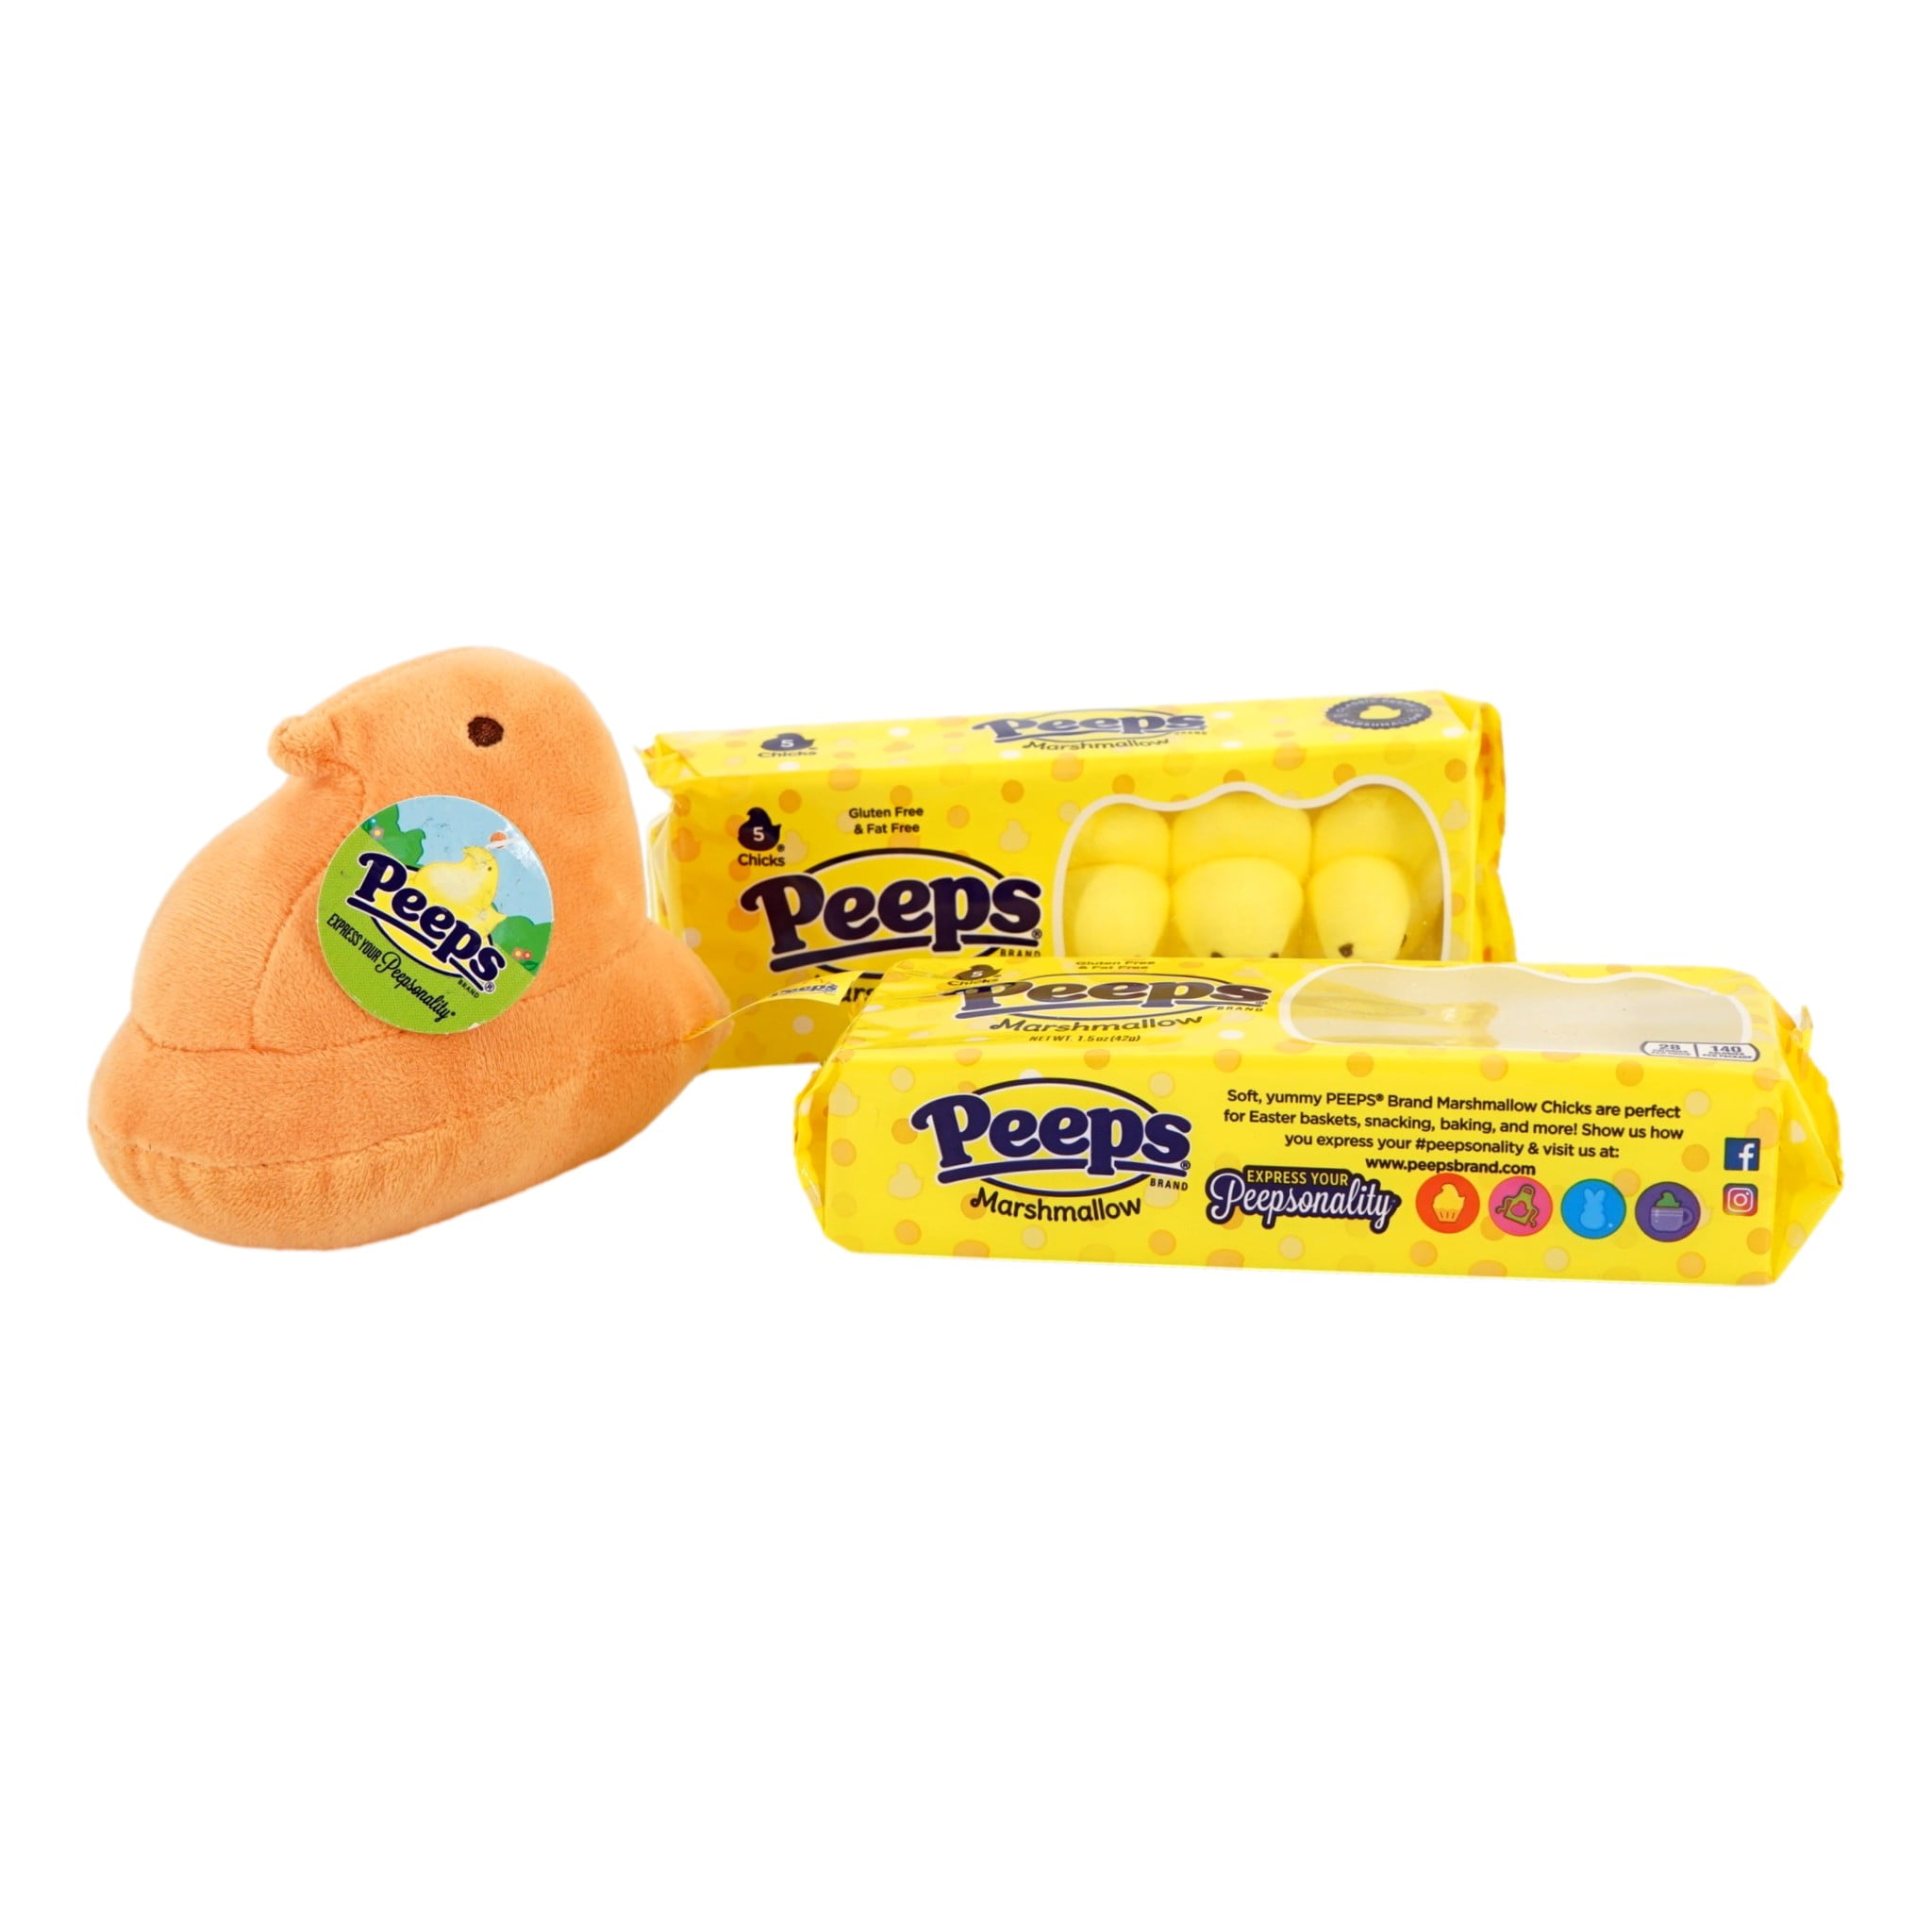 NEW Peeps Marshmallow Orange Chicks Plush New With Tags!